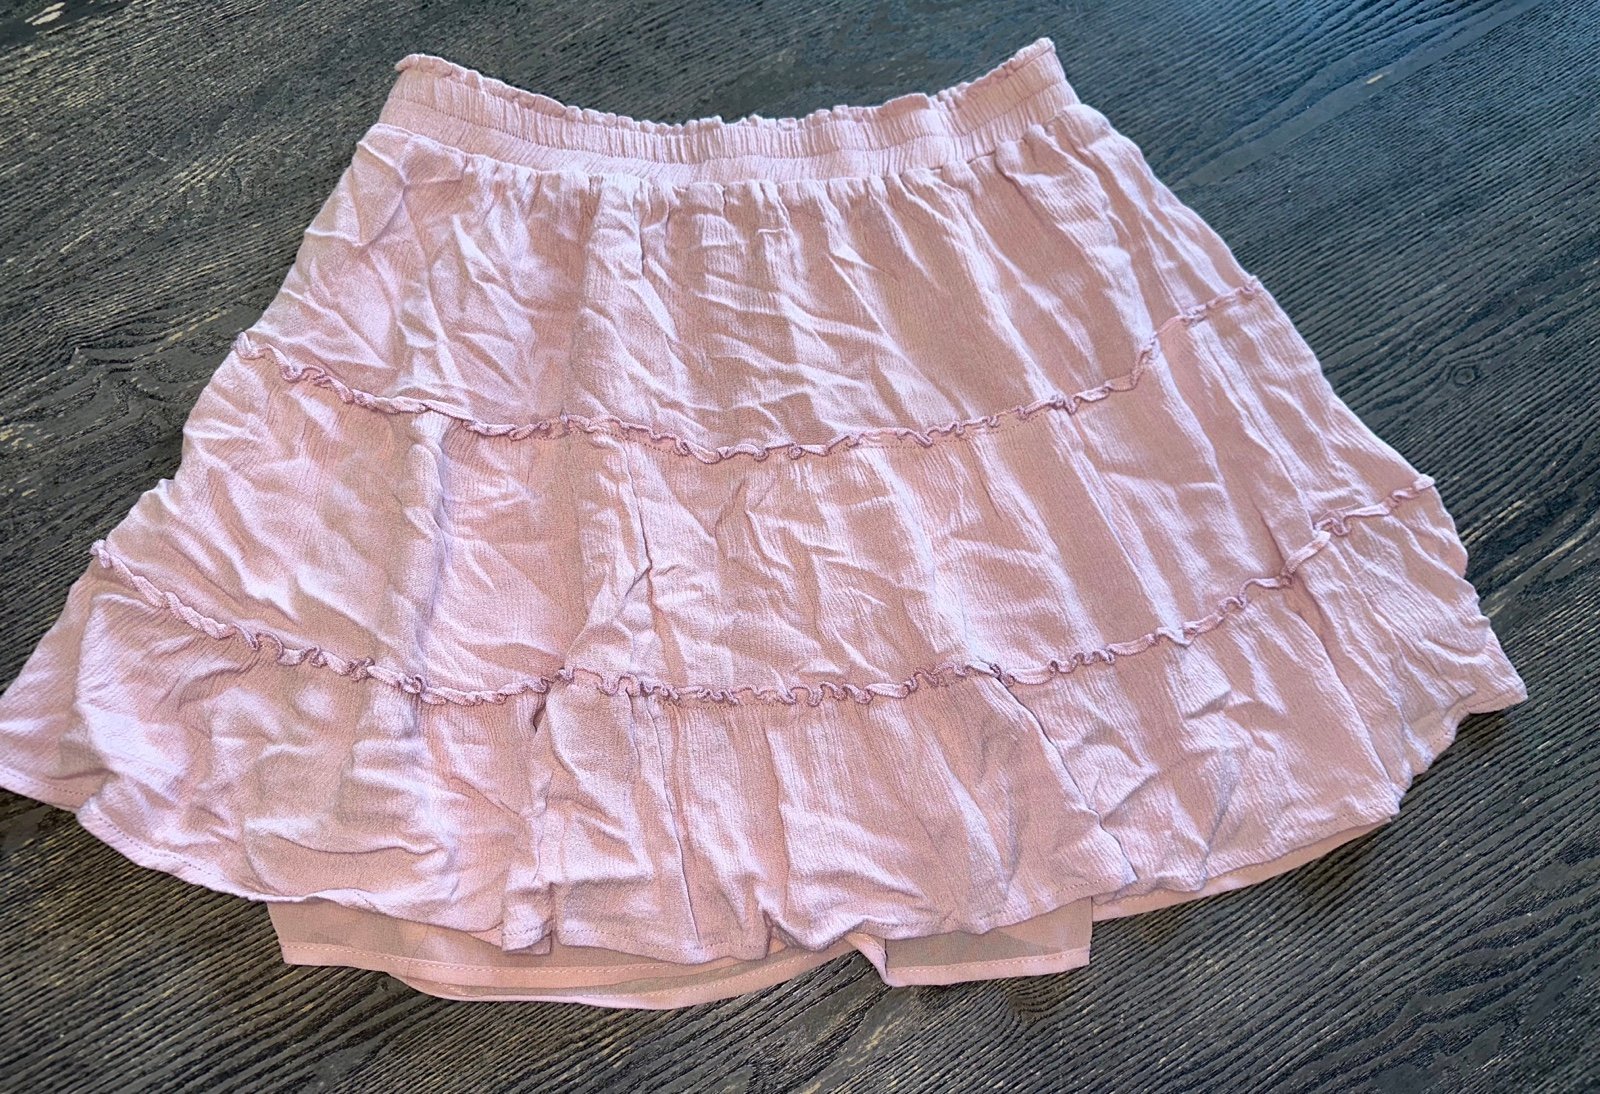 Wholesale price Blue B Pink Tiered Ruffle Skirt Medium 